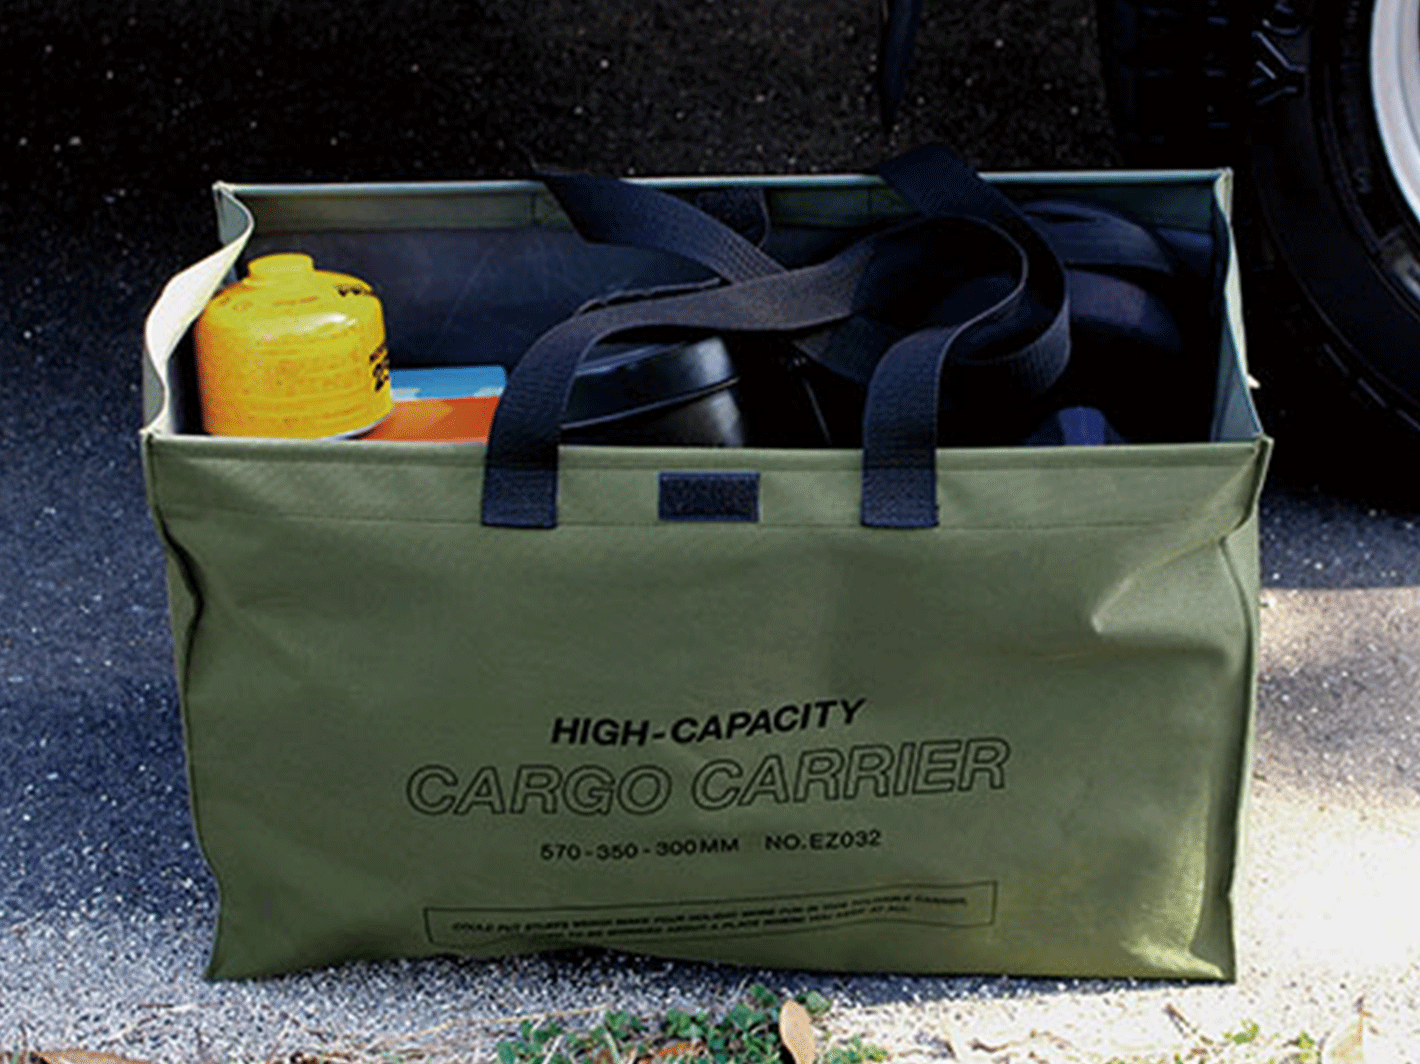 Cargo Bag L Yellow